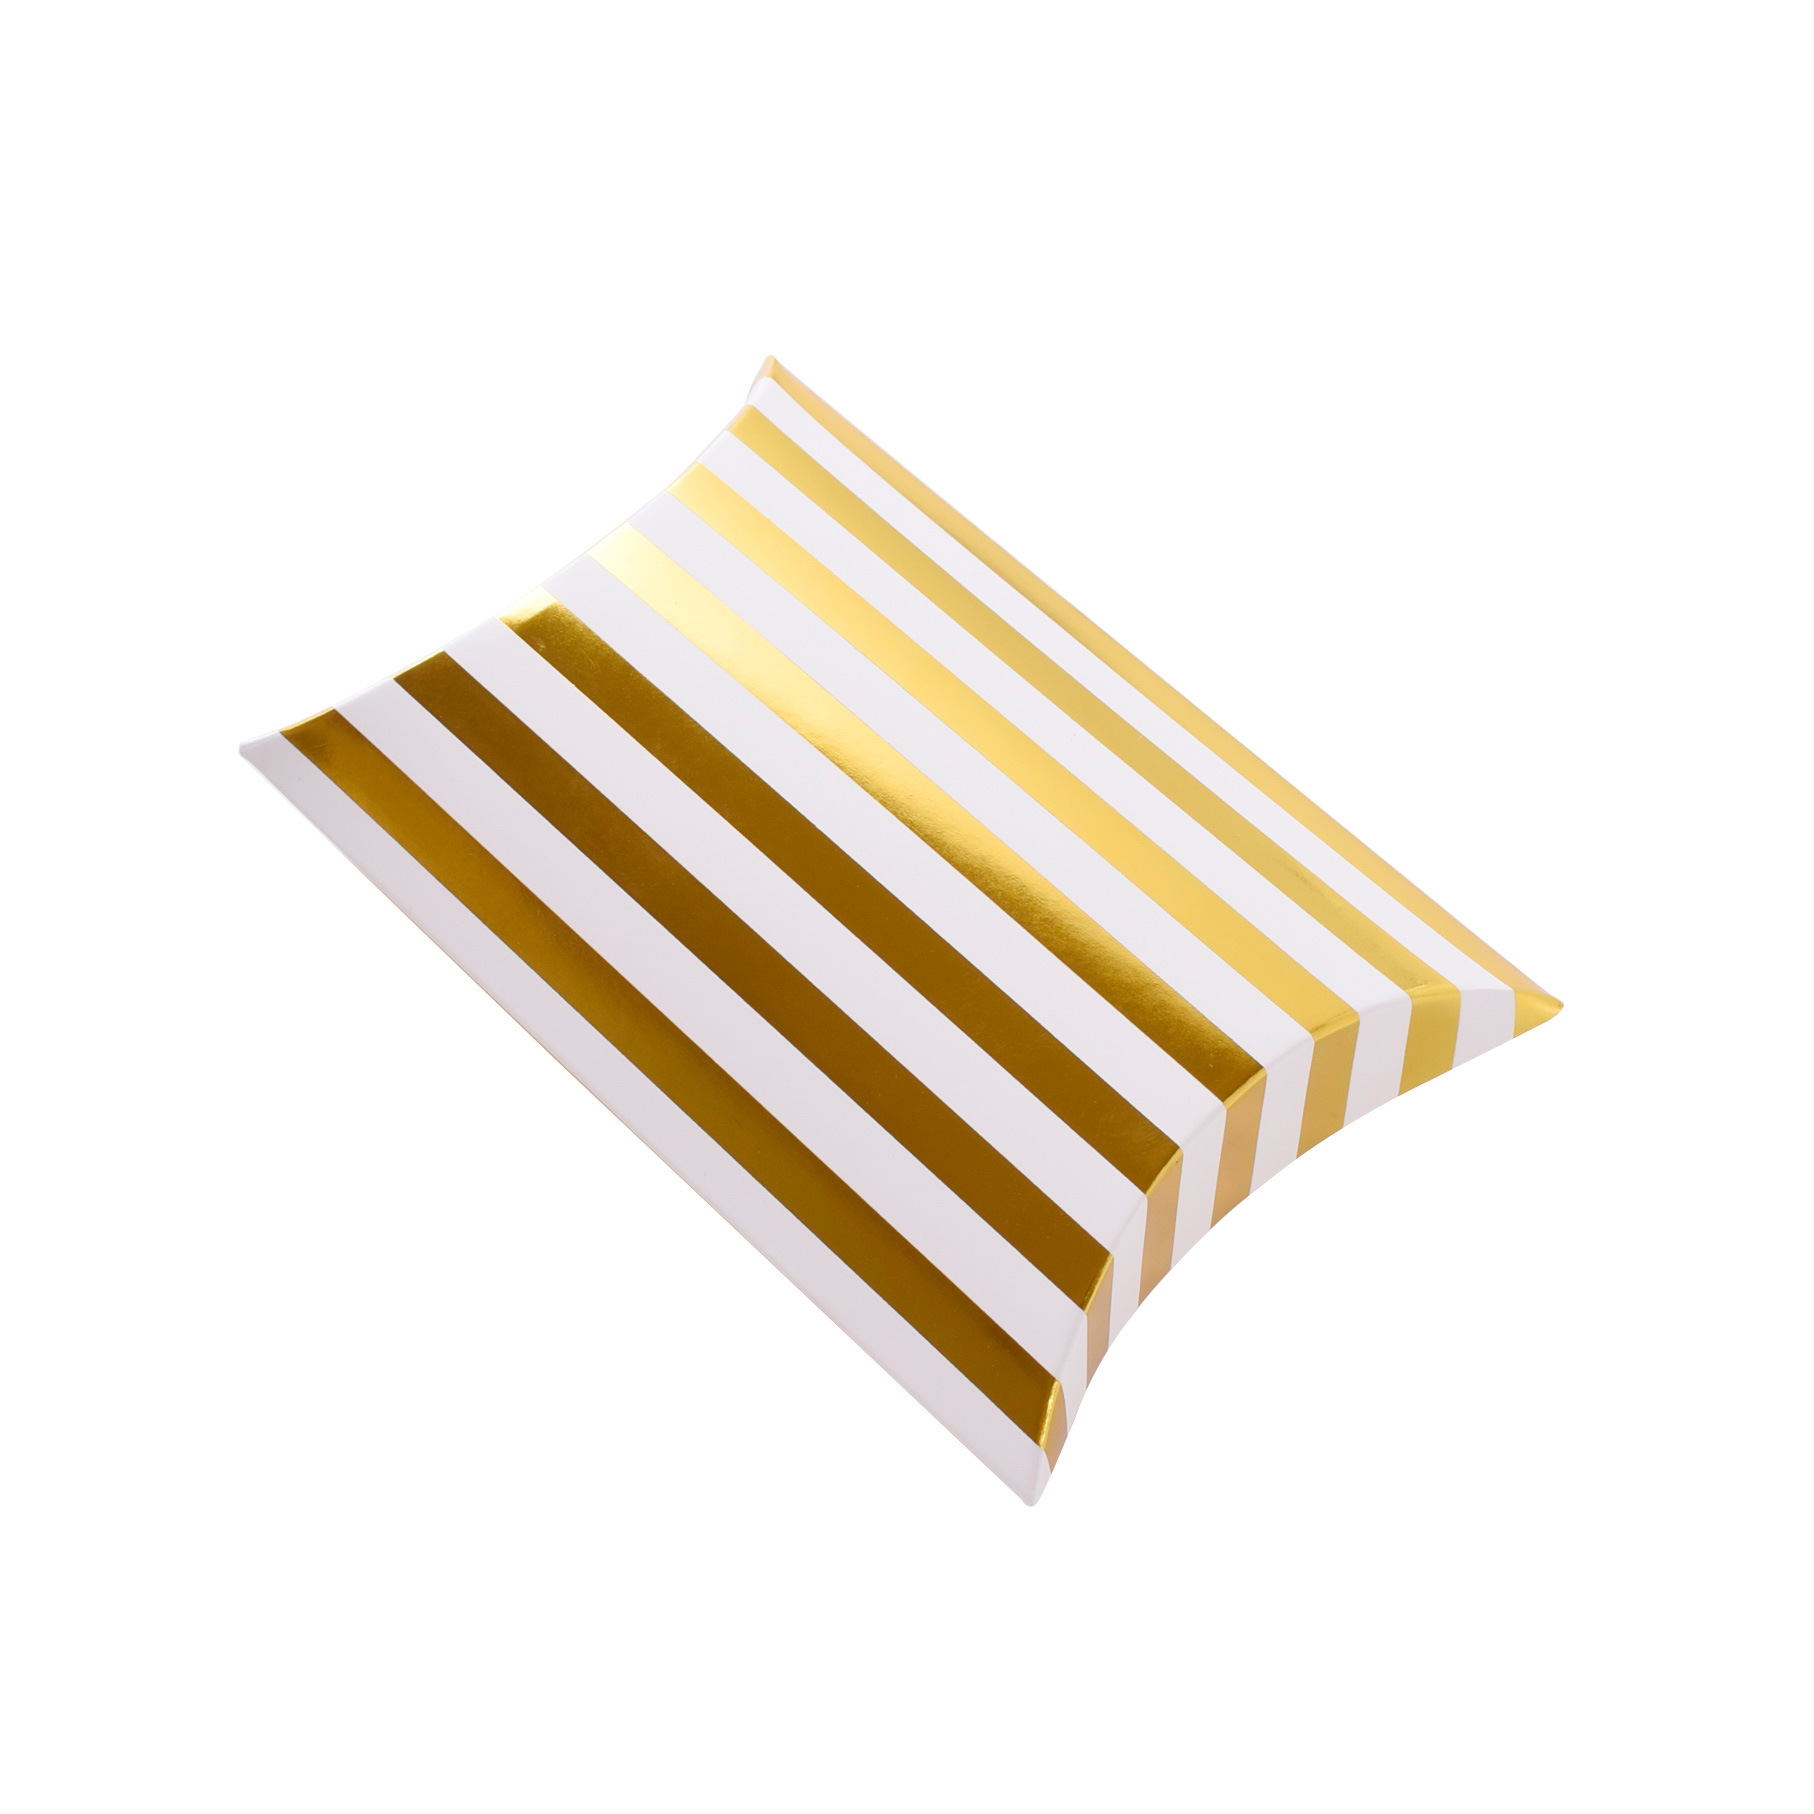 2:Bronzing stripes